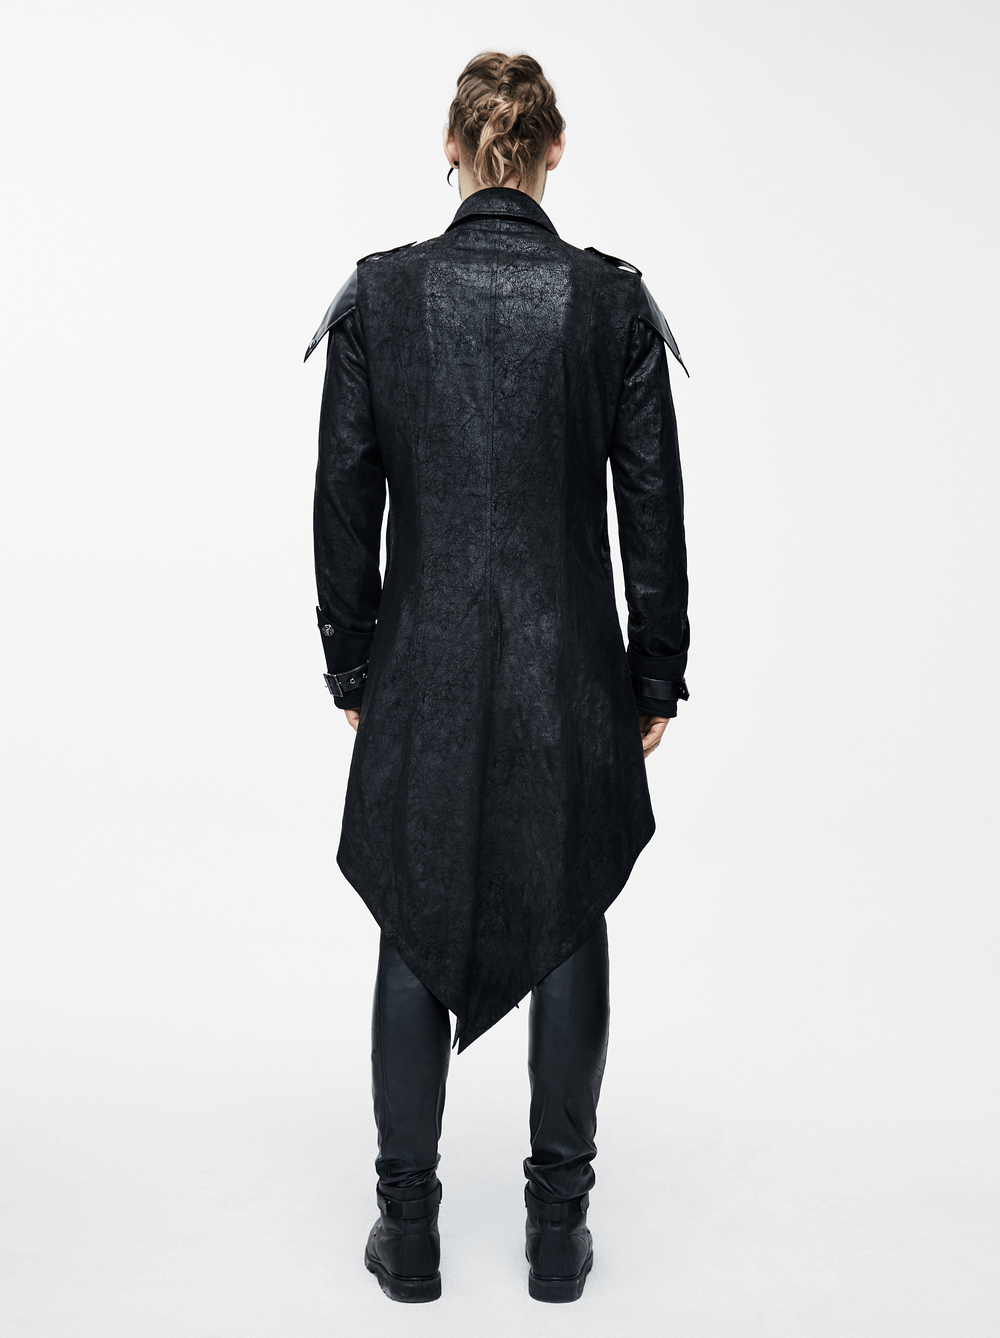 Gothic Vintage Long Black Men's Coat / Steampunk Medieval Warrior Knight Overcoat - HARD'N'HEAVY